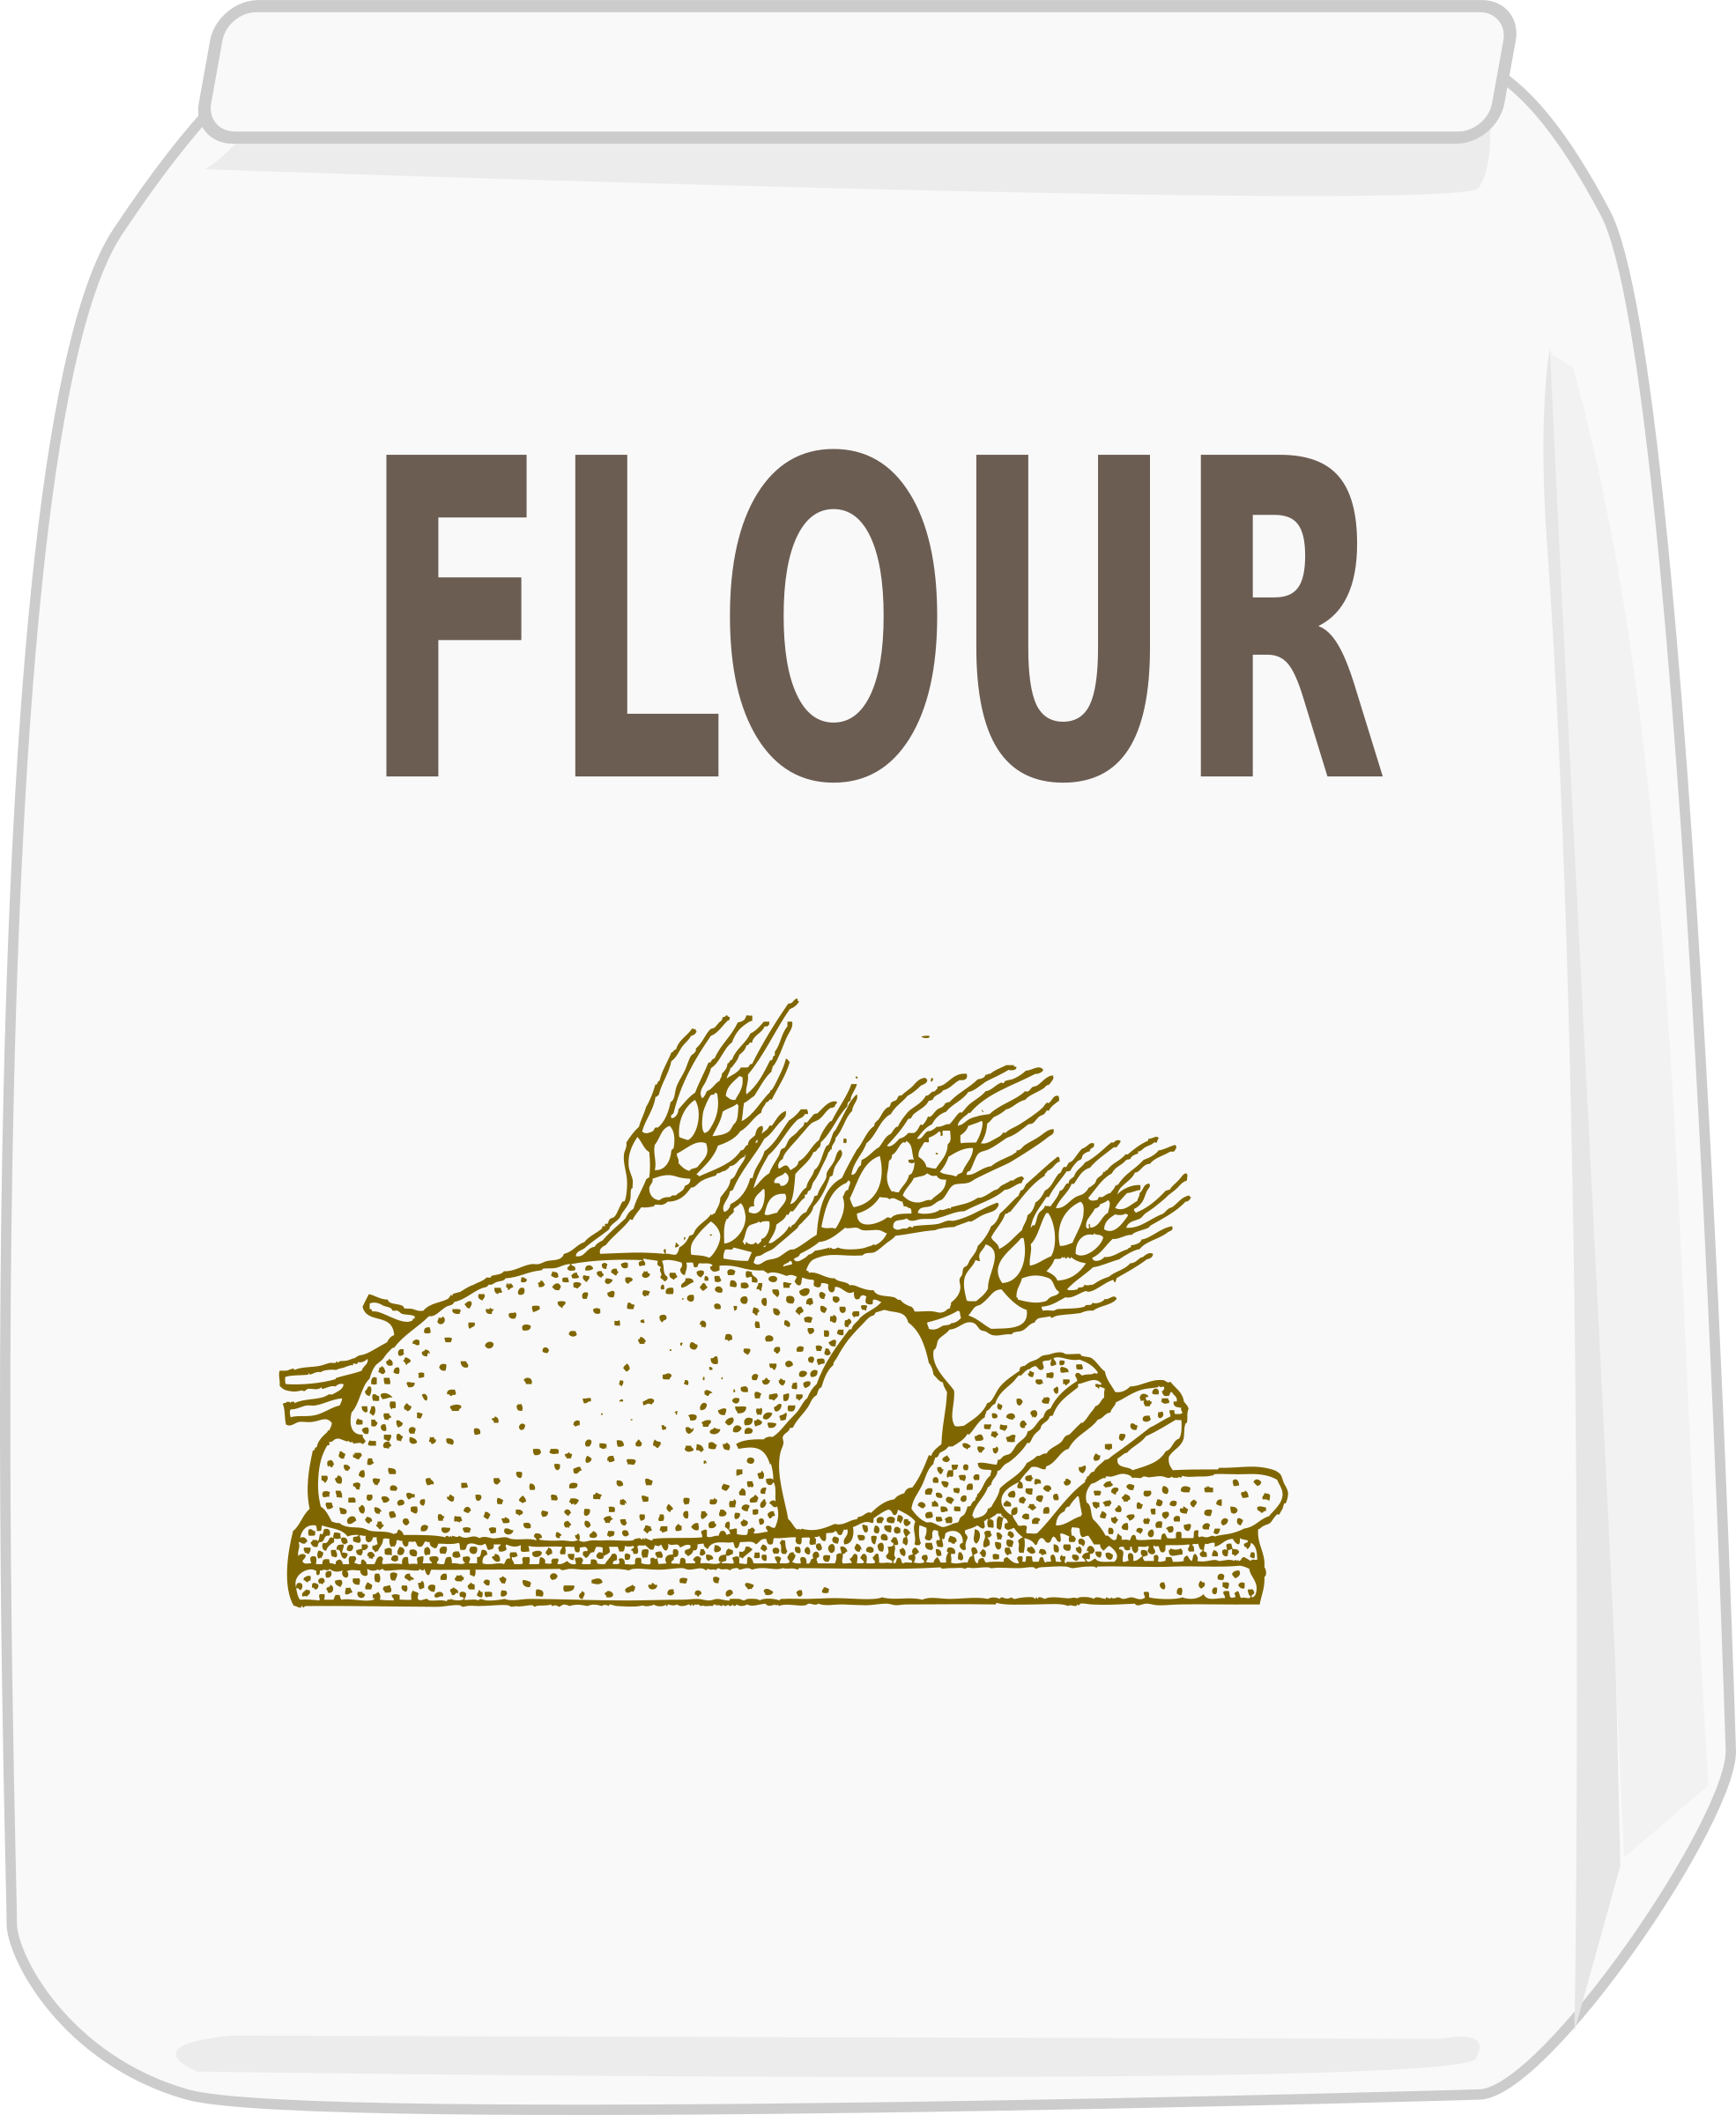 Flour clipart free download clip art on 5